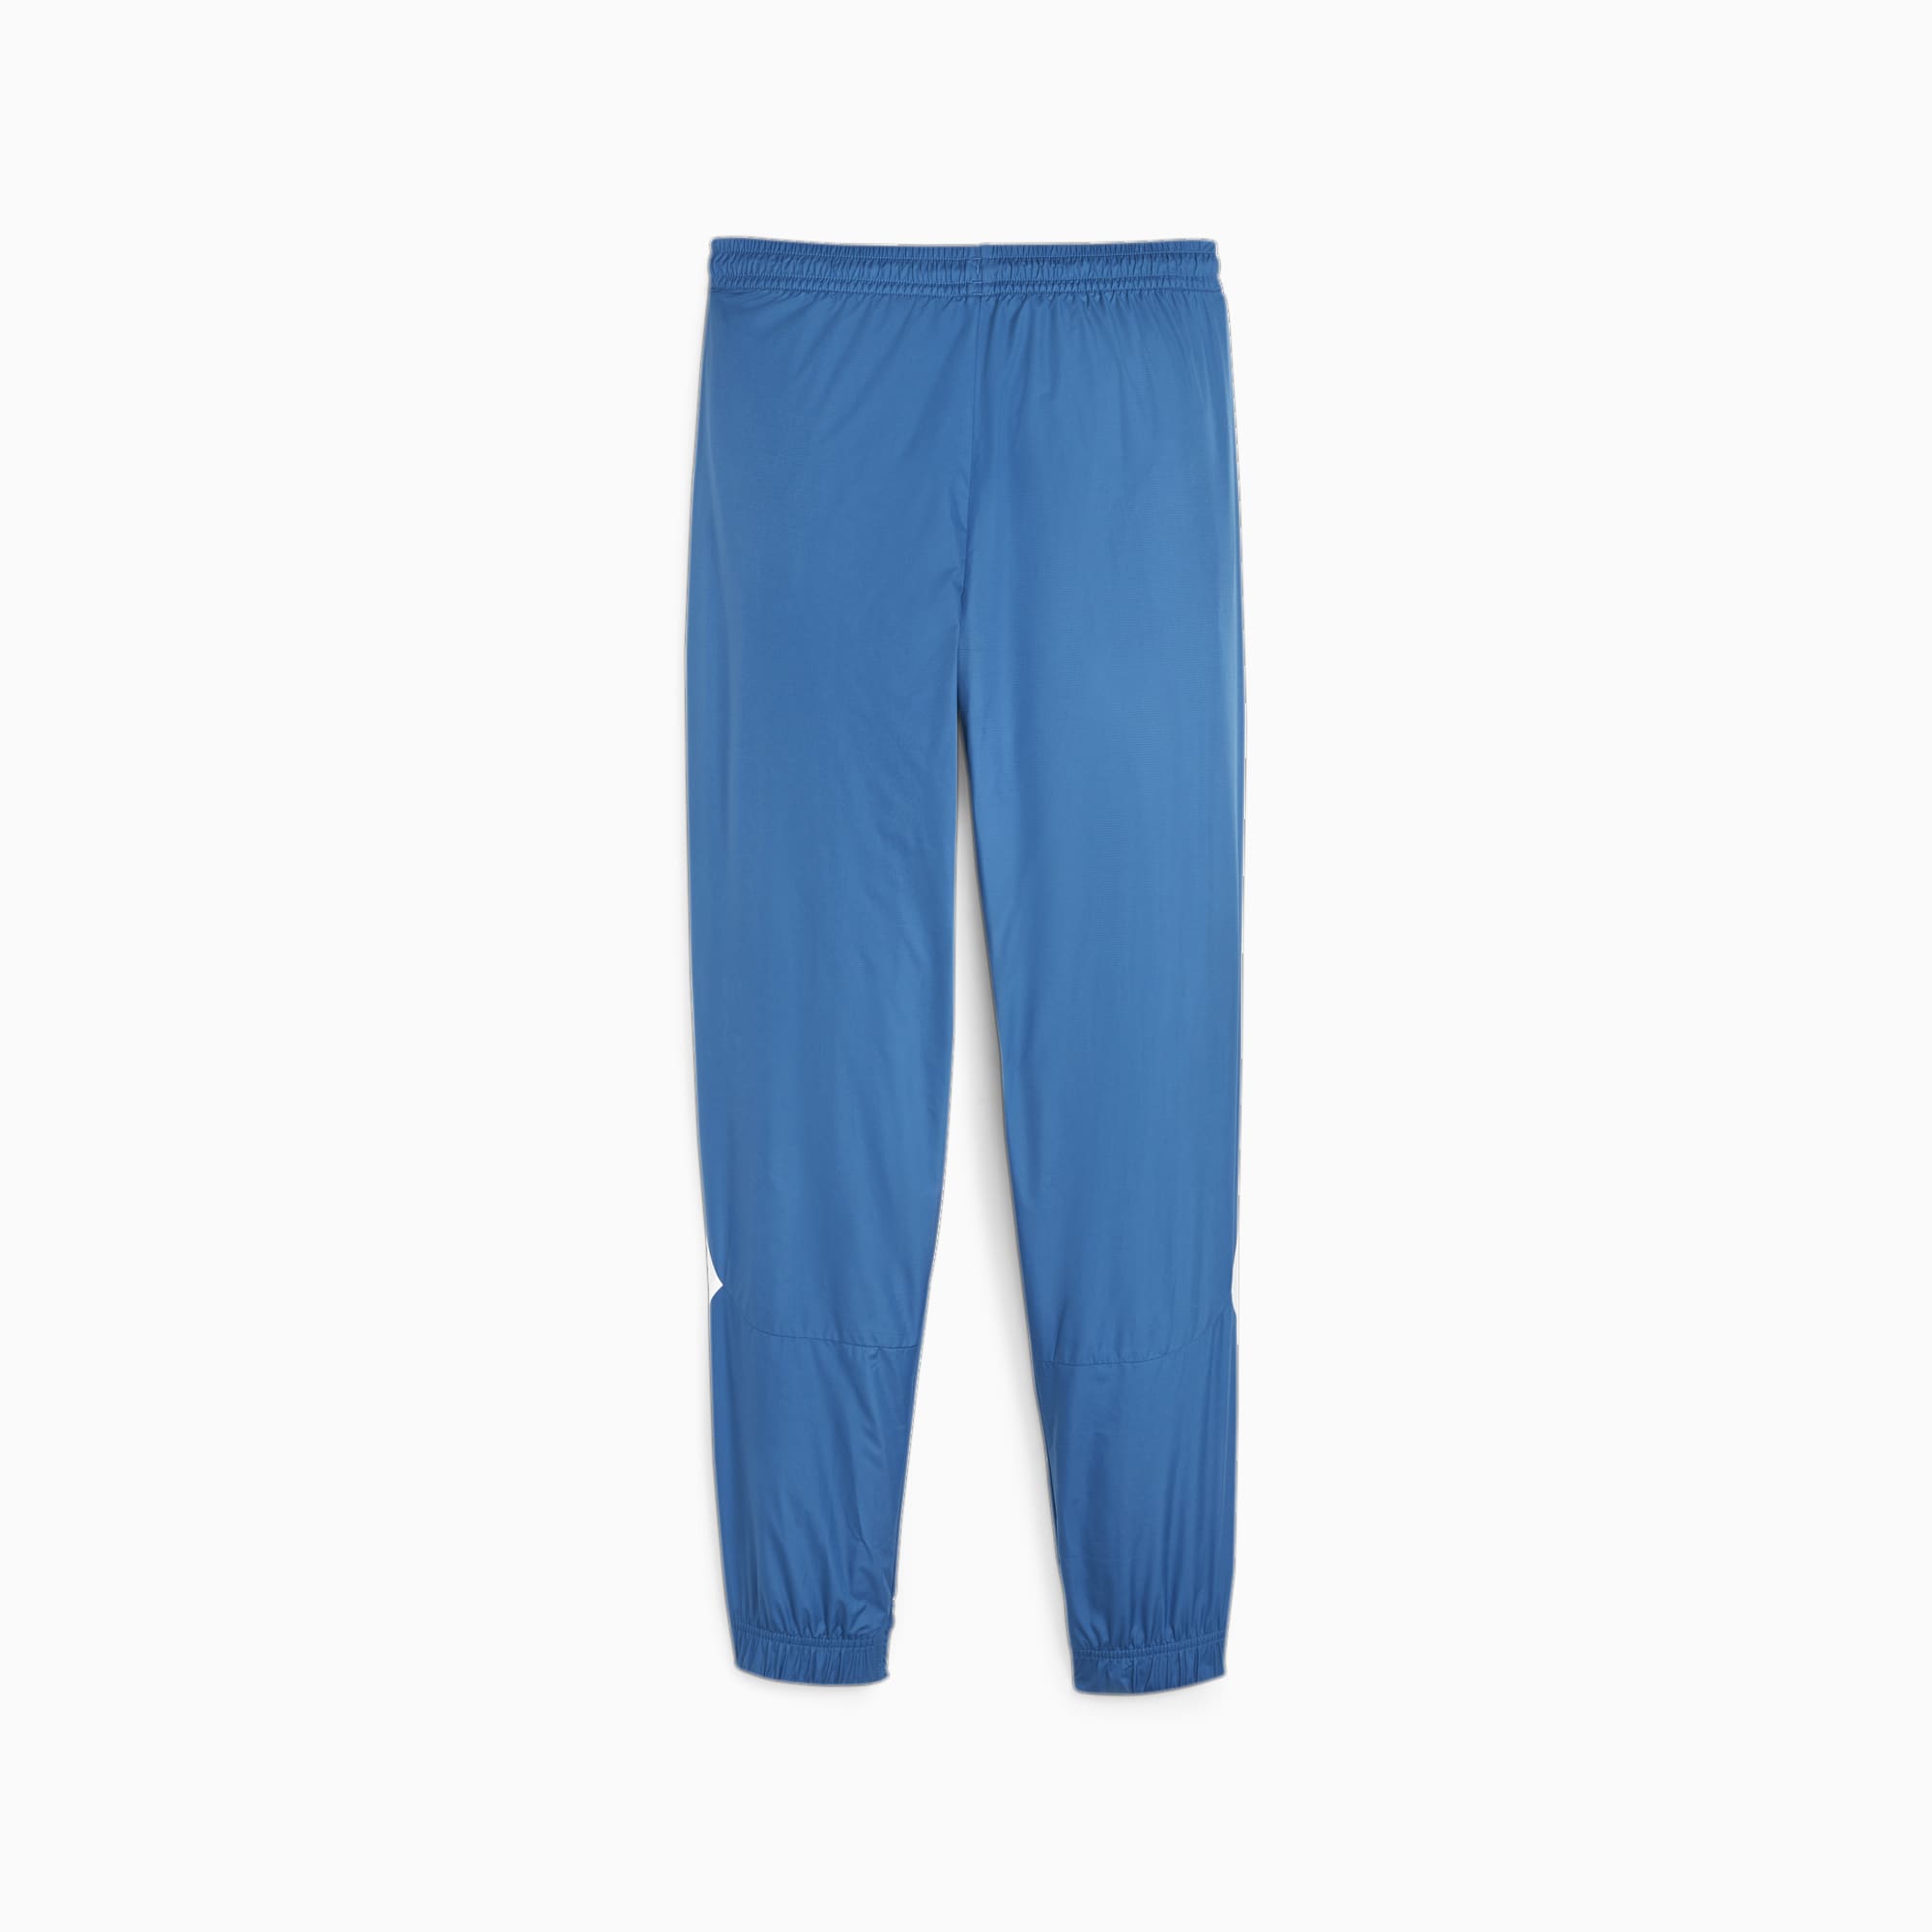 PUMA Manchester City F.C. Prematch Woven Pants Men, Lake Blue/White, Size M, Clothing